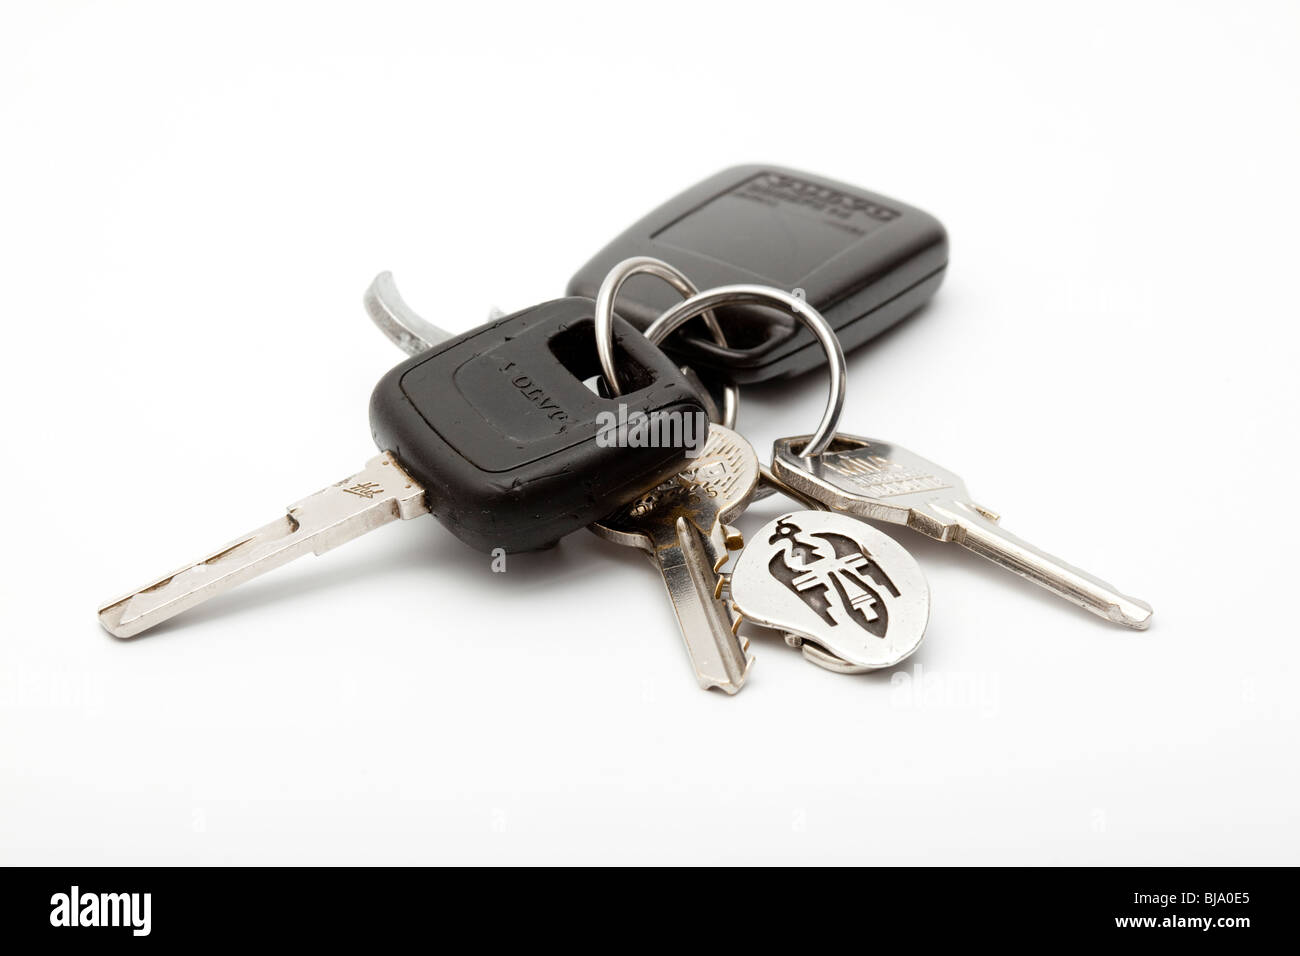 Car keys on key ring Stock Photo - Alamy